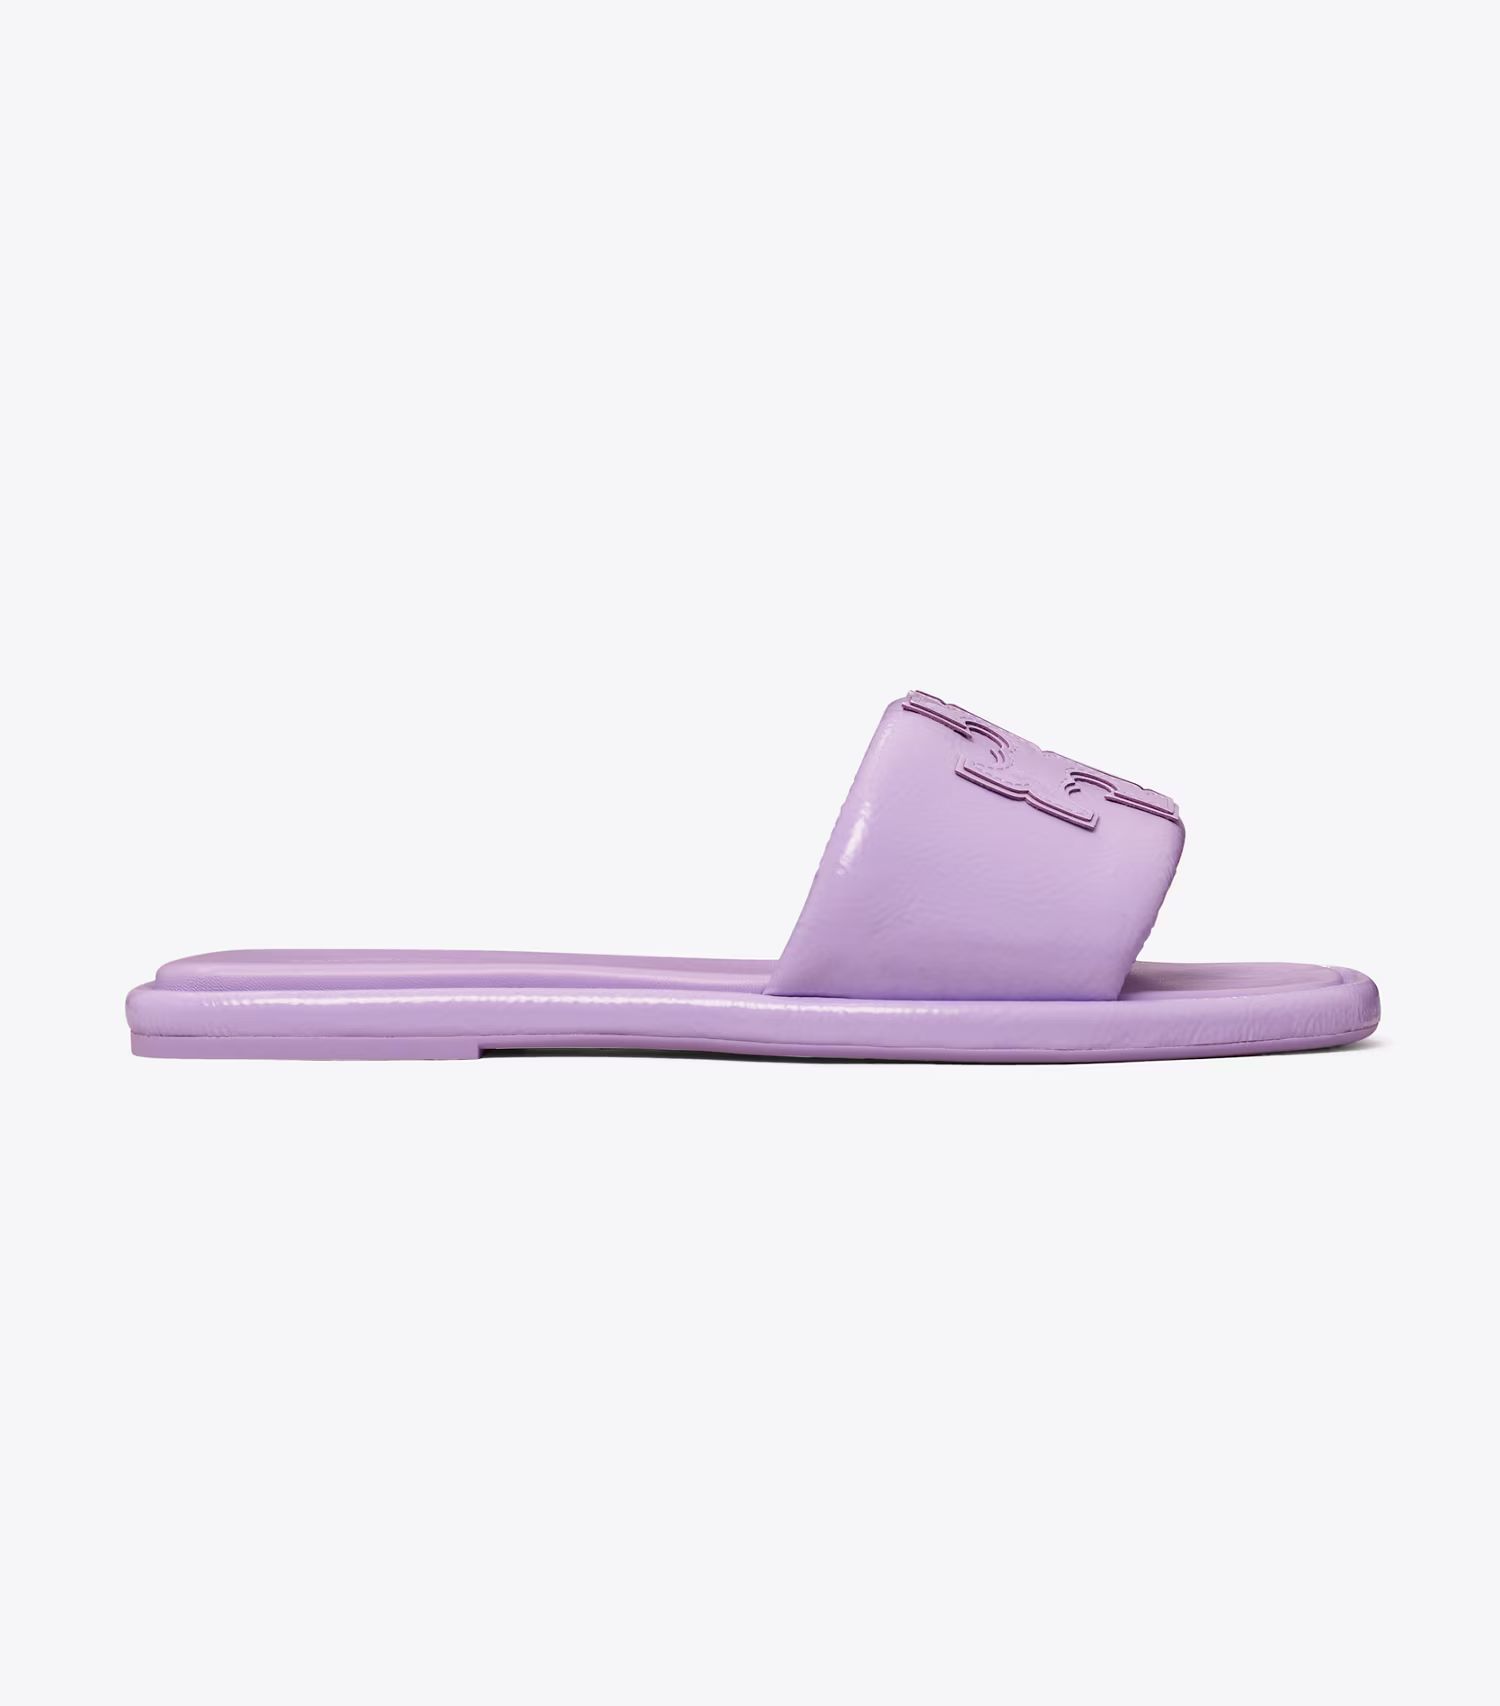 Double T Sport Slide: Women's Designer Sandals | Tory Burch | Tory Burch (US)